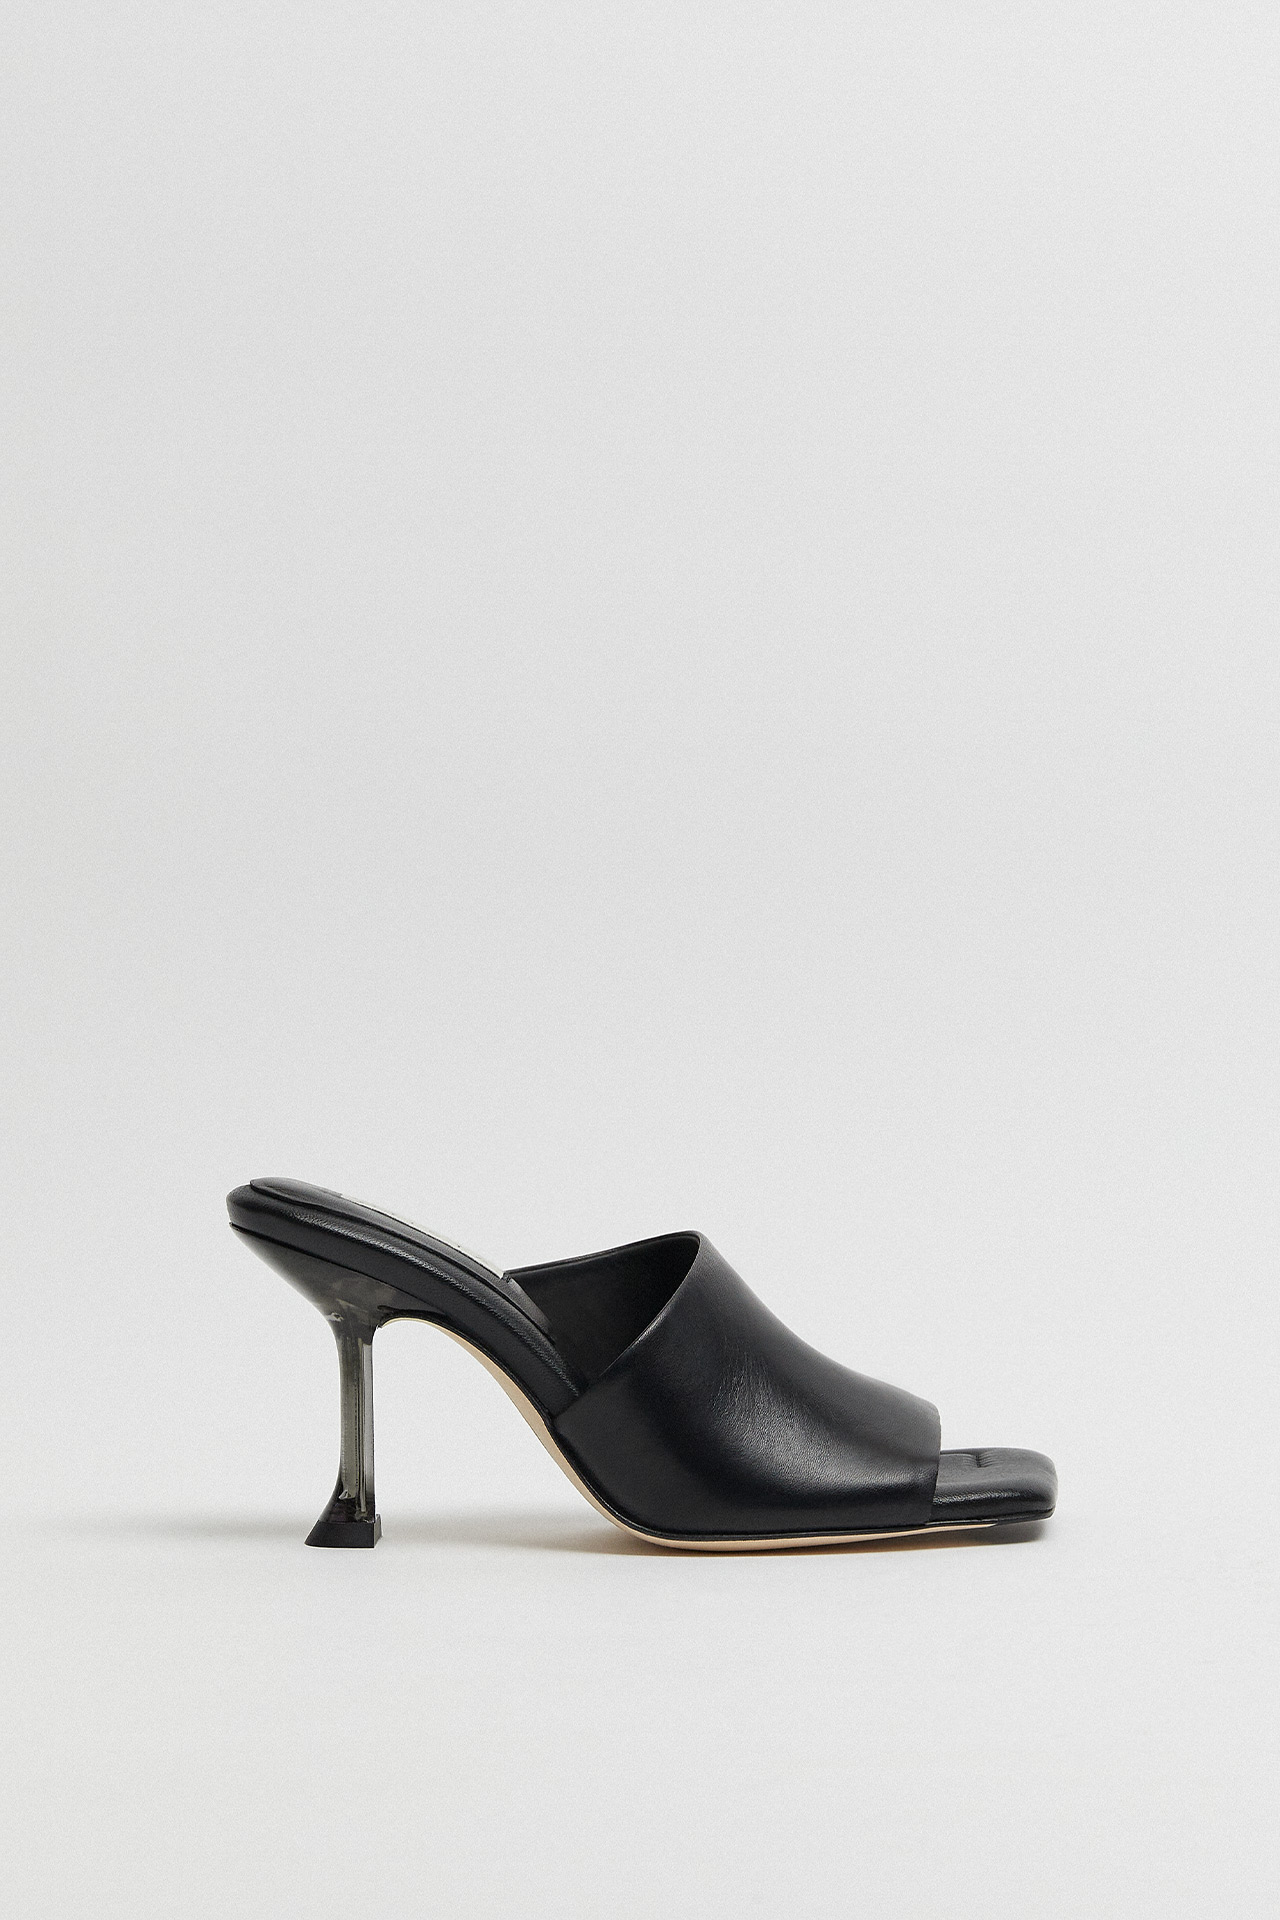 Miri Black Mules Sandals | Miista Europe | Made in Spain